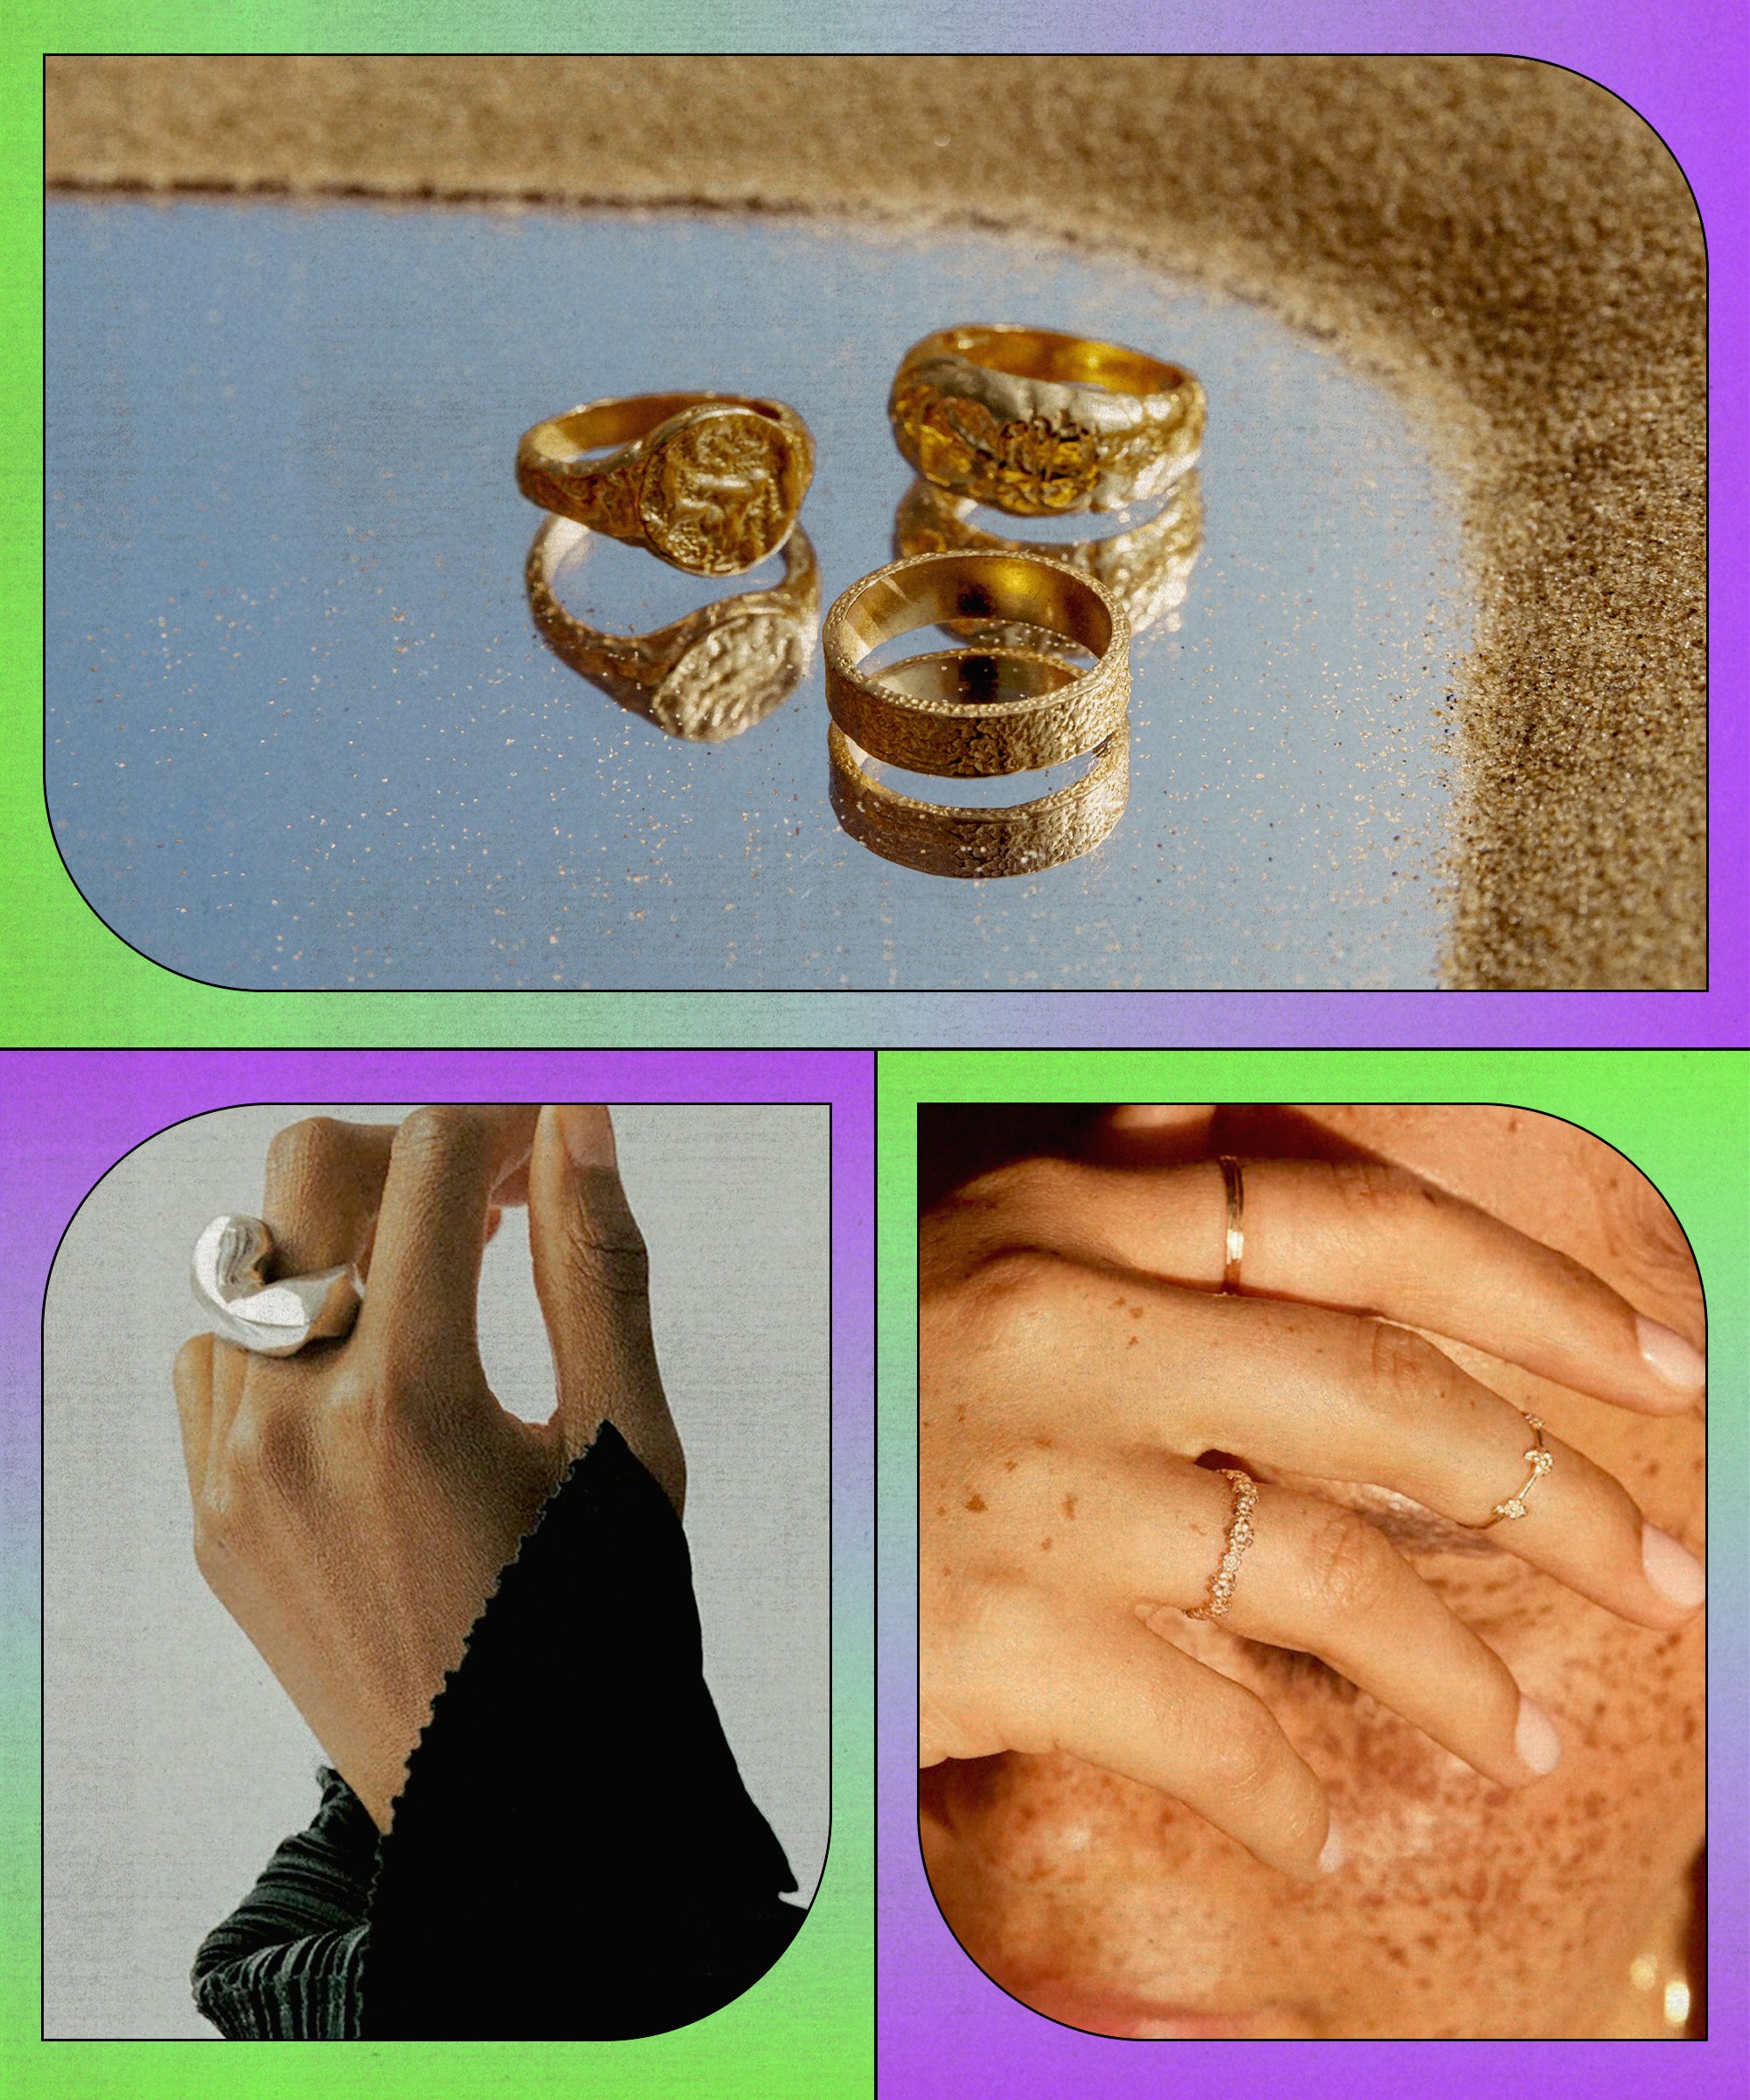 Fashion Fairy Tail Ring Silver Crystal Diamond Ring